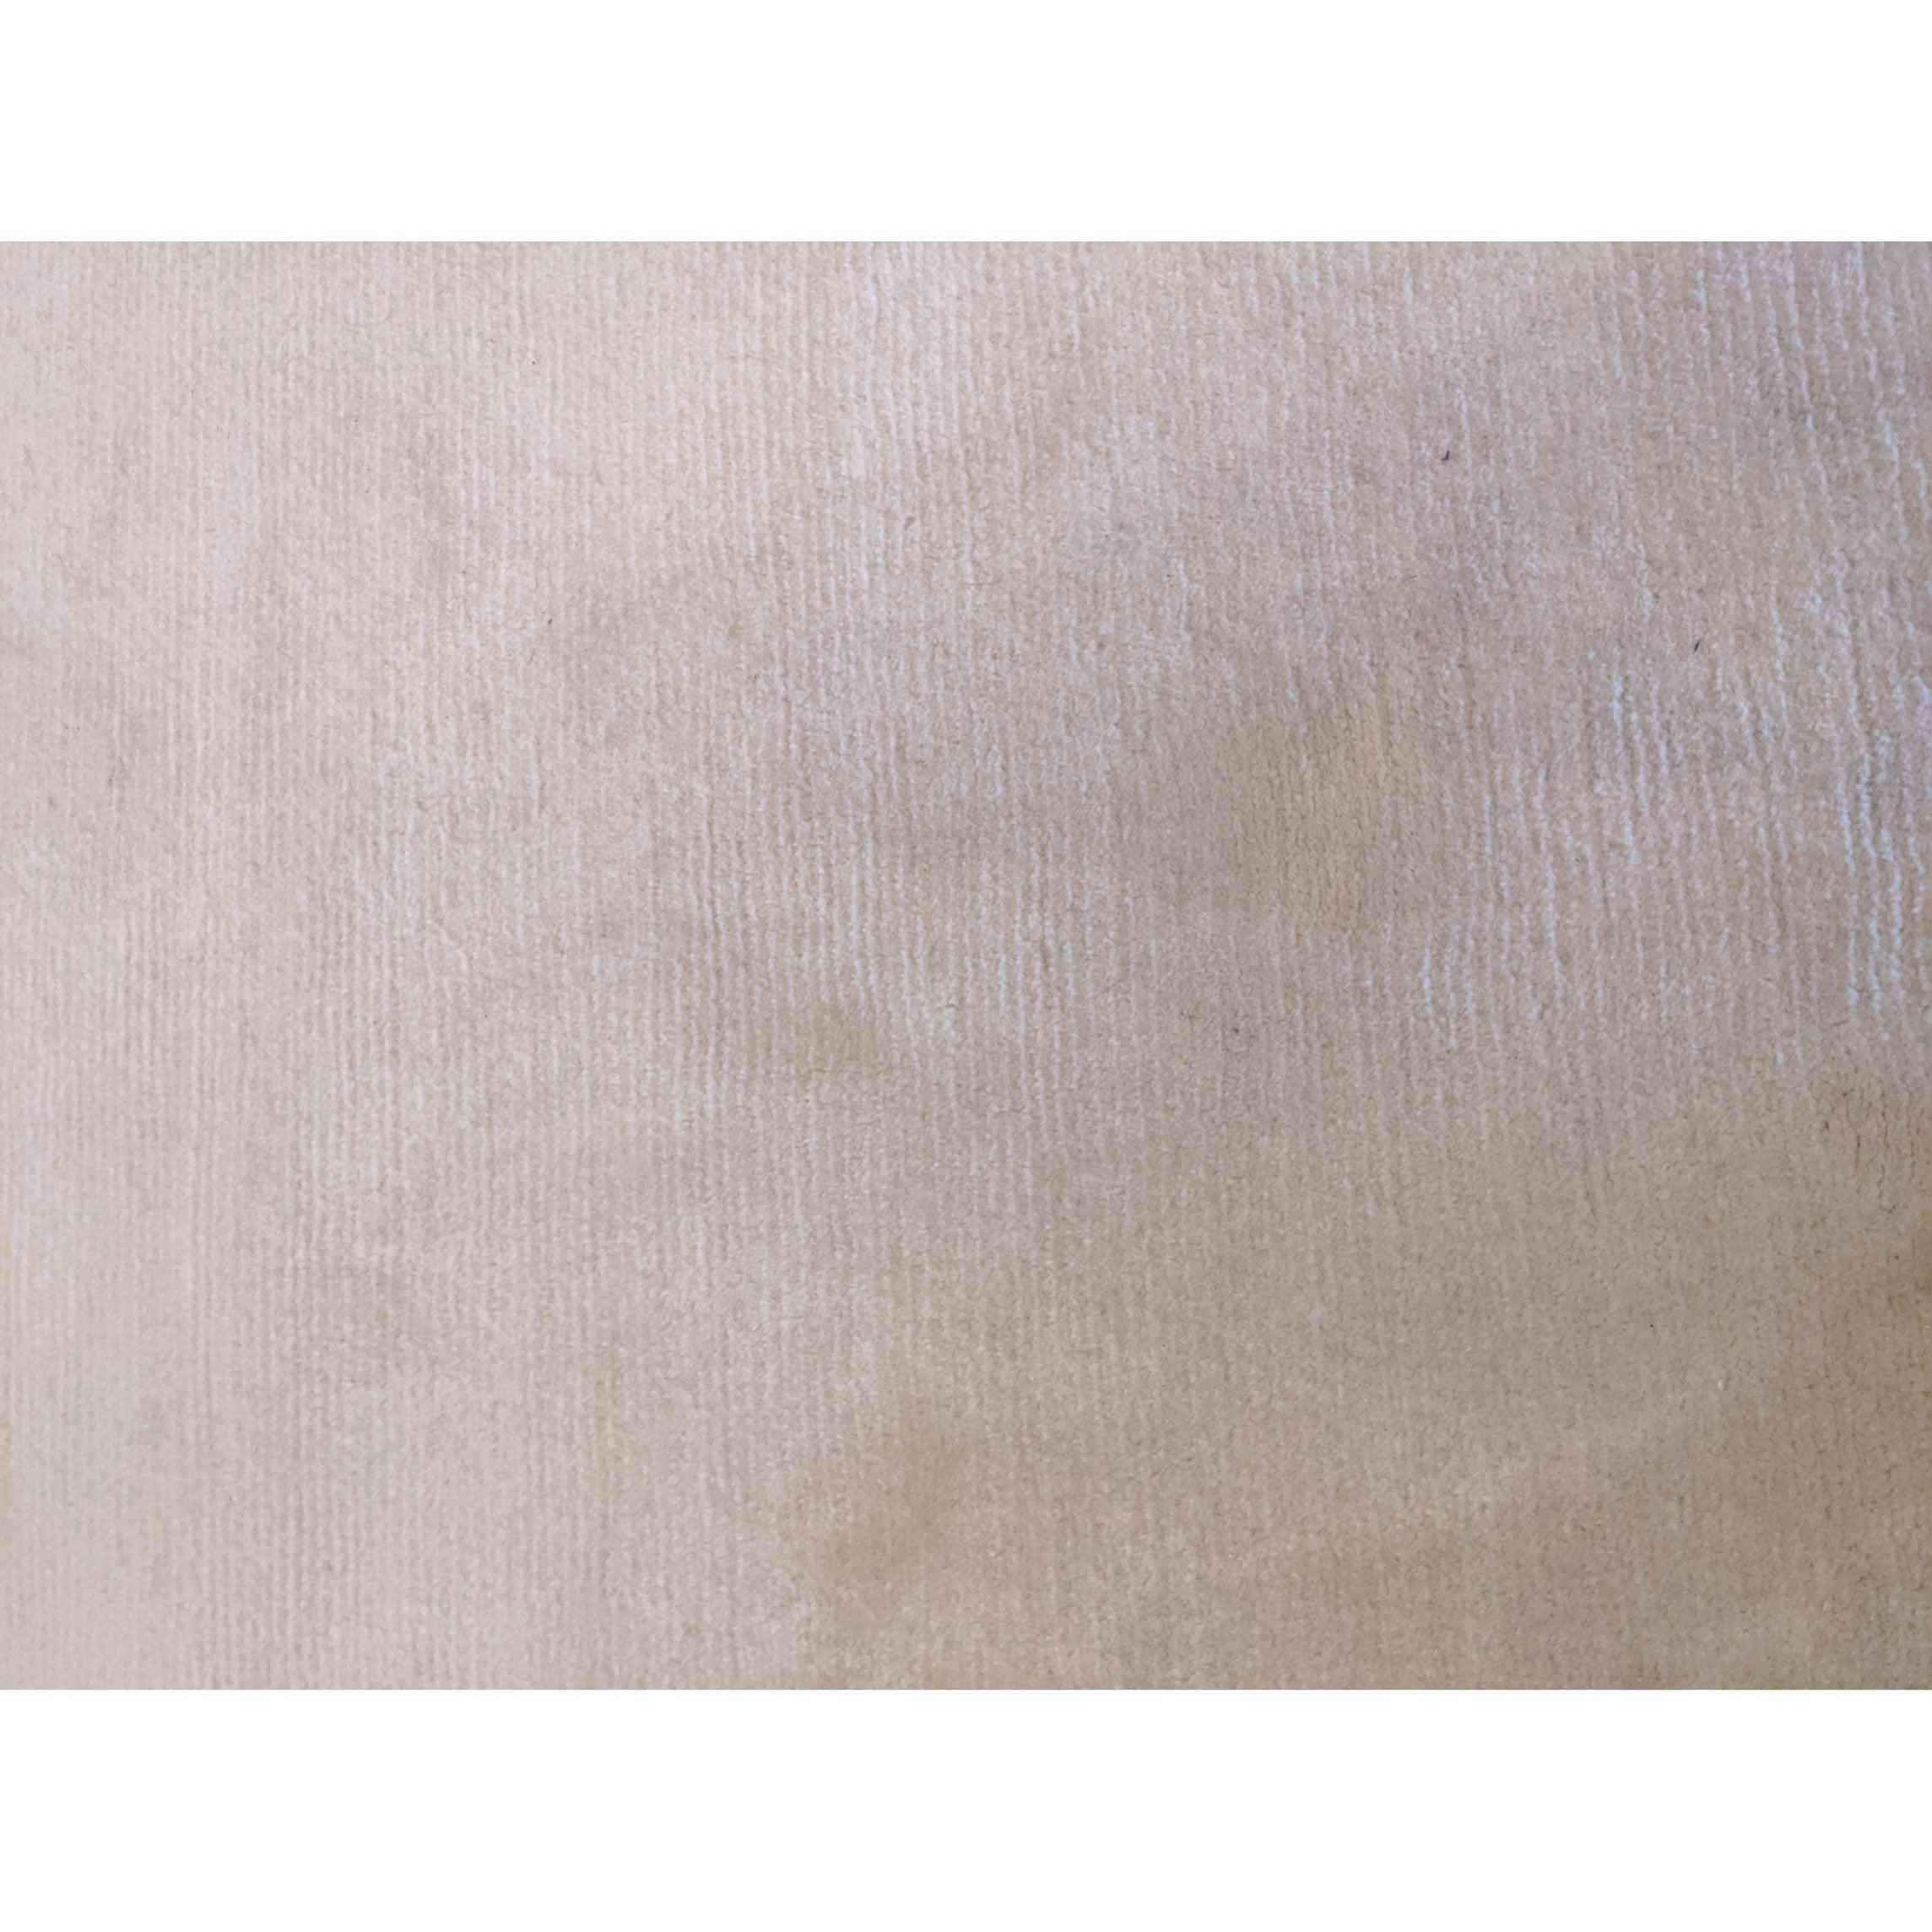 186 x 123 cm Modern Handmade Grey & Multicolor Rug - Rugmaster